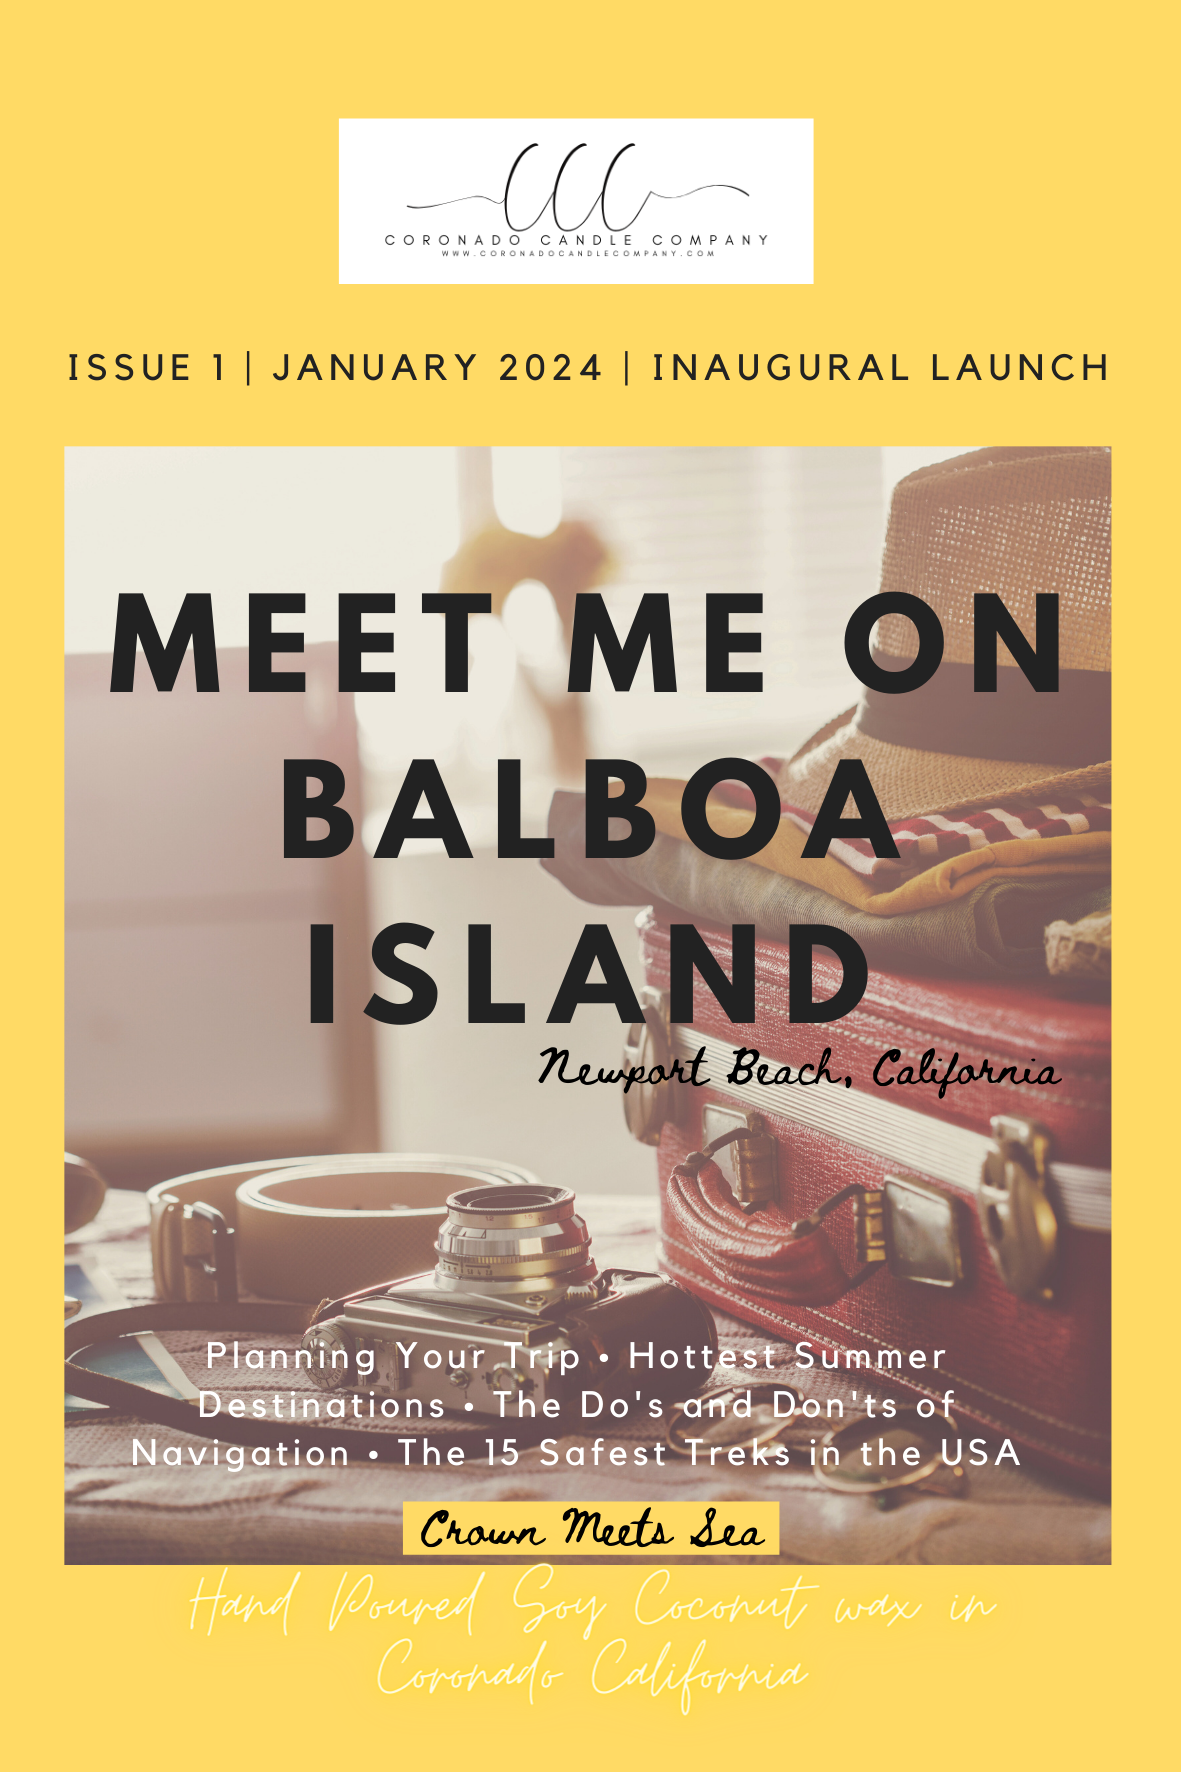 Meet me on Balboa Island Candle